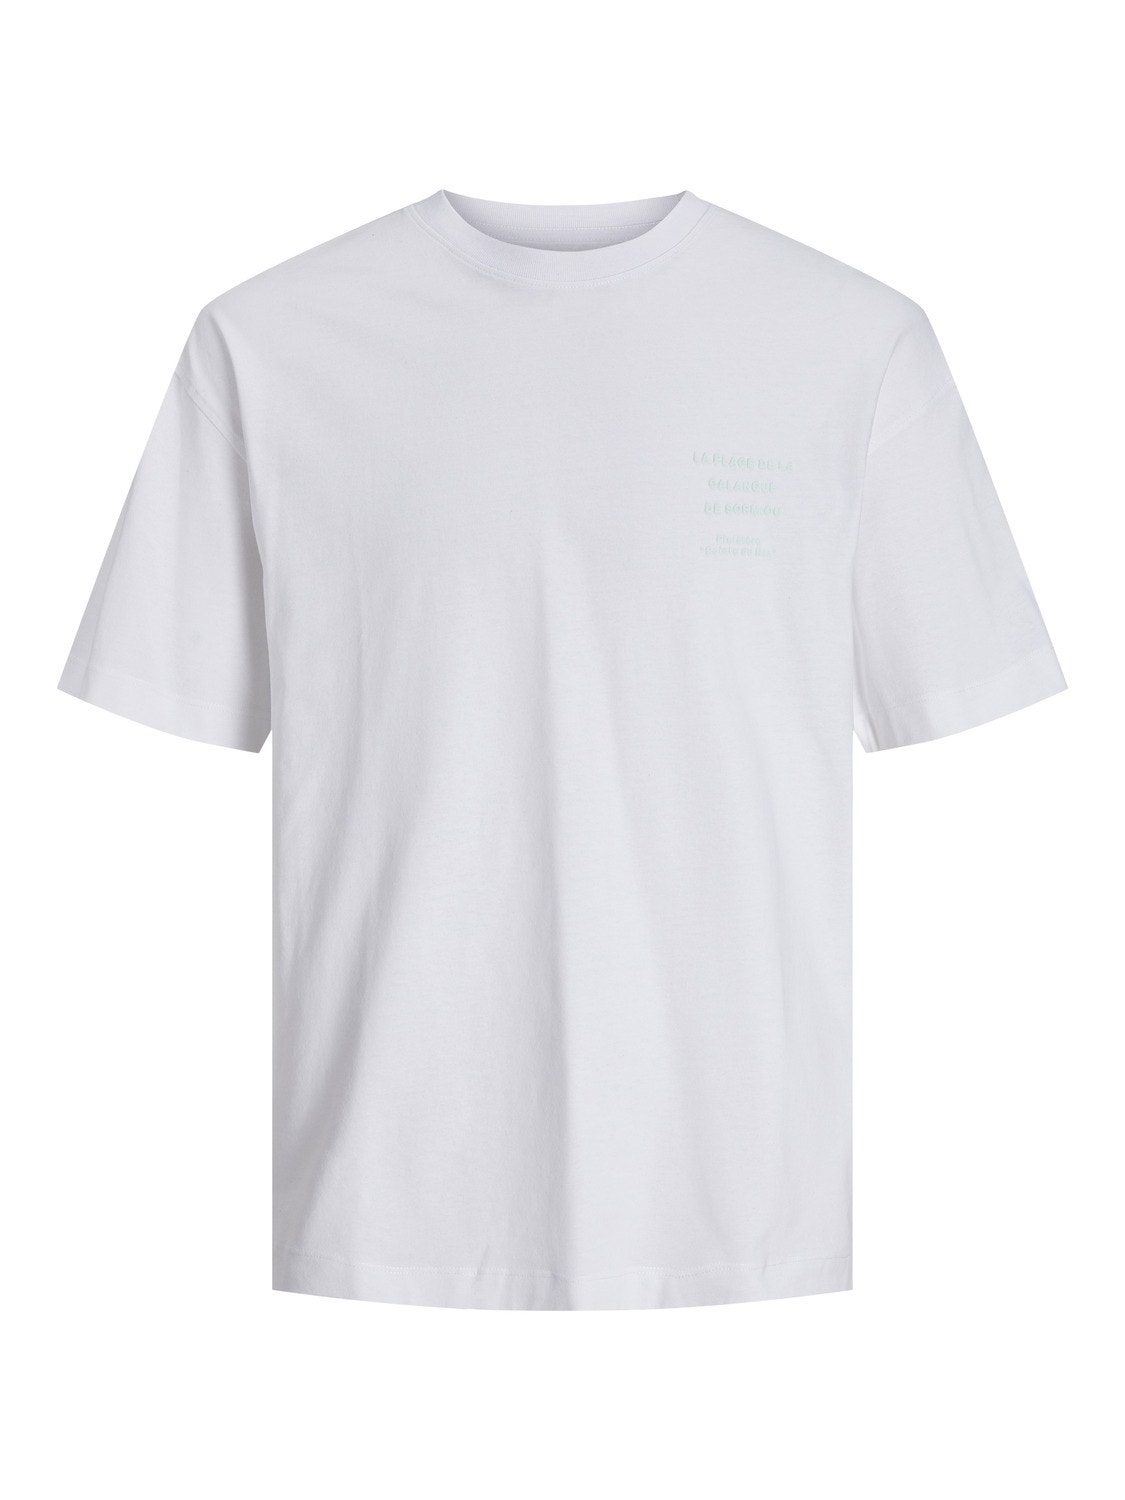 Jack & Jones Printed Crew neck T-shirt -Bright White - 12251970